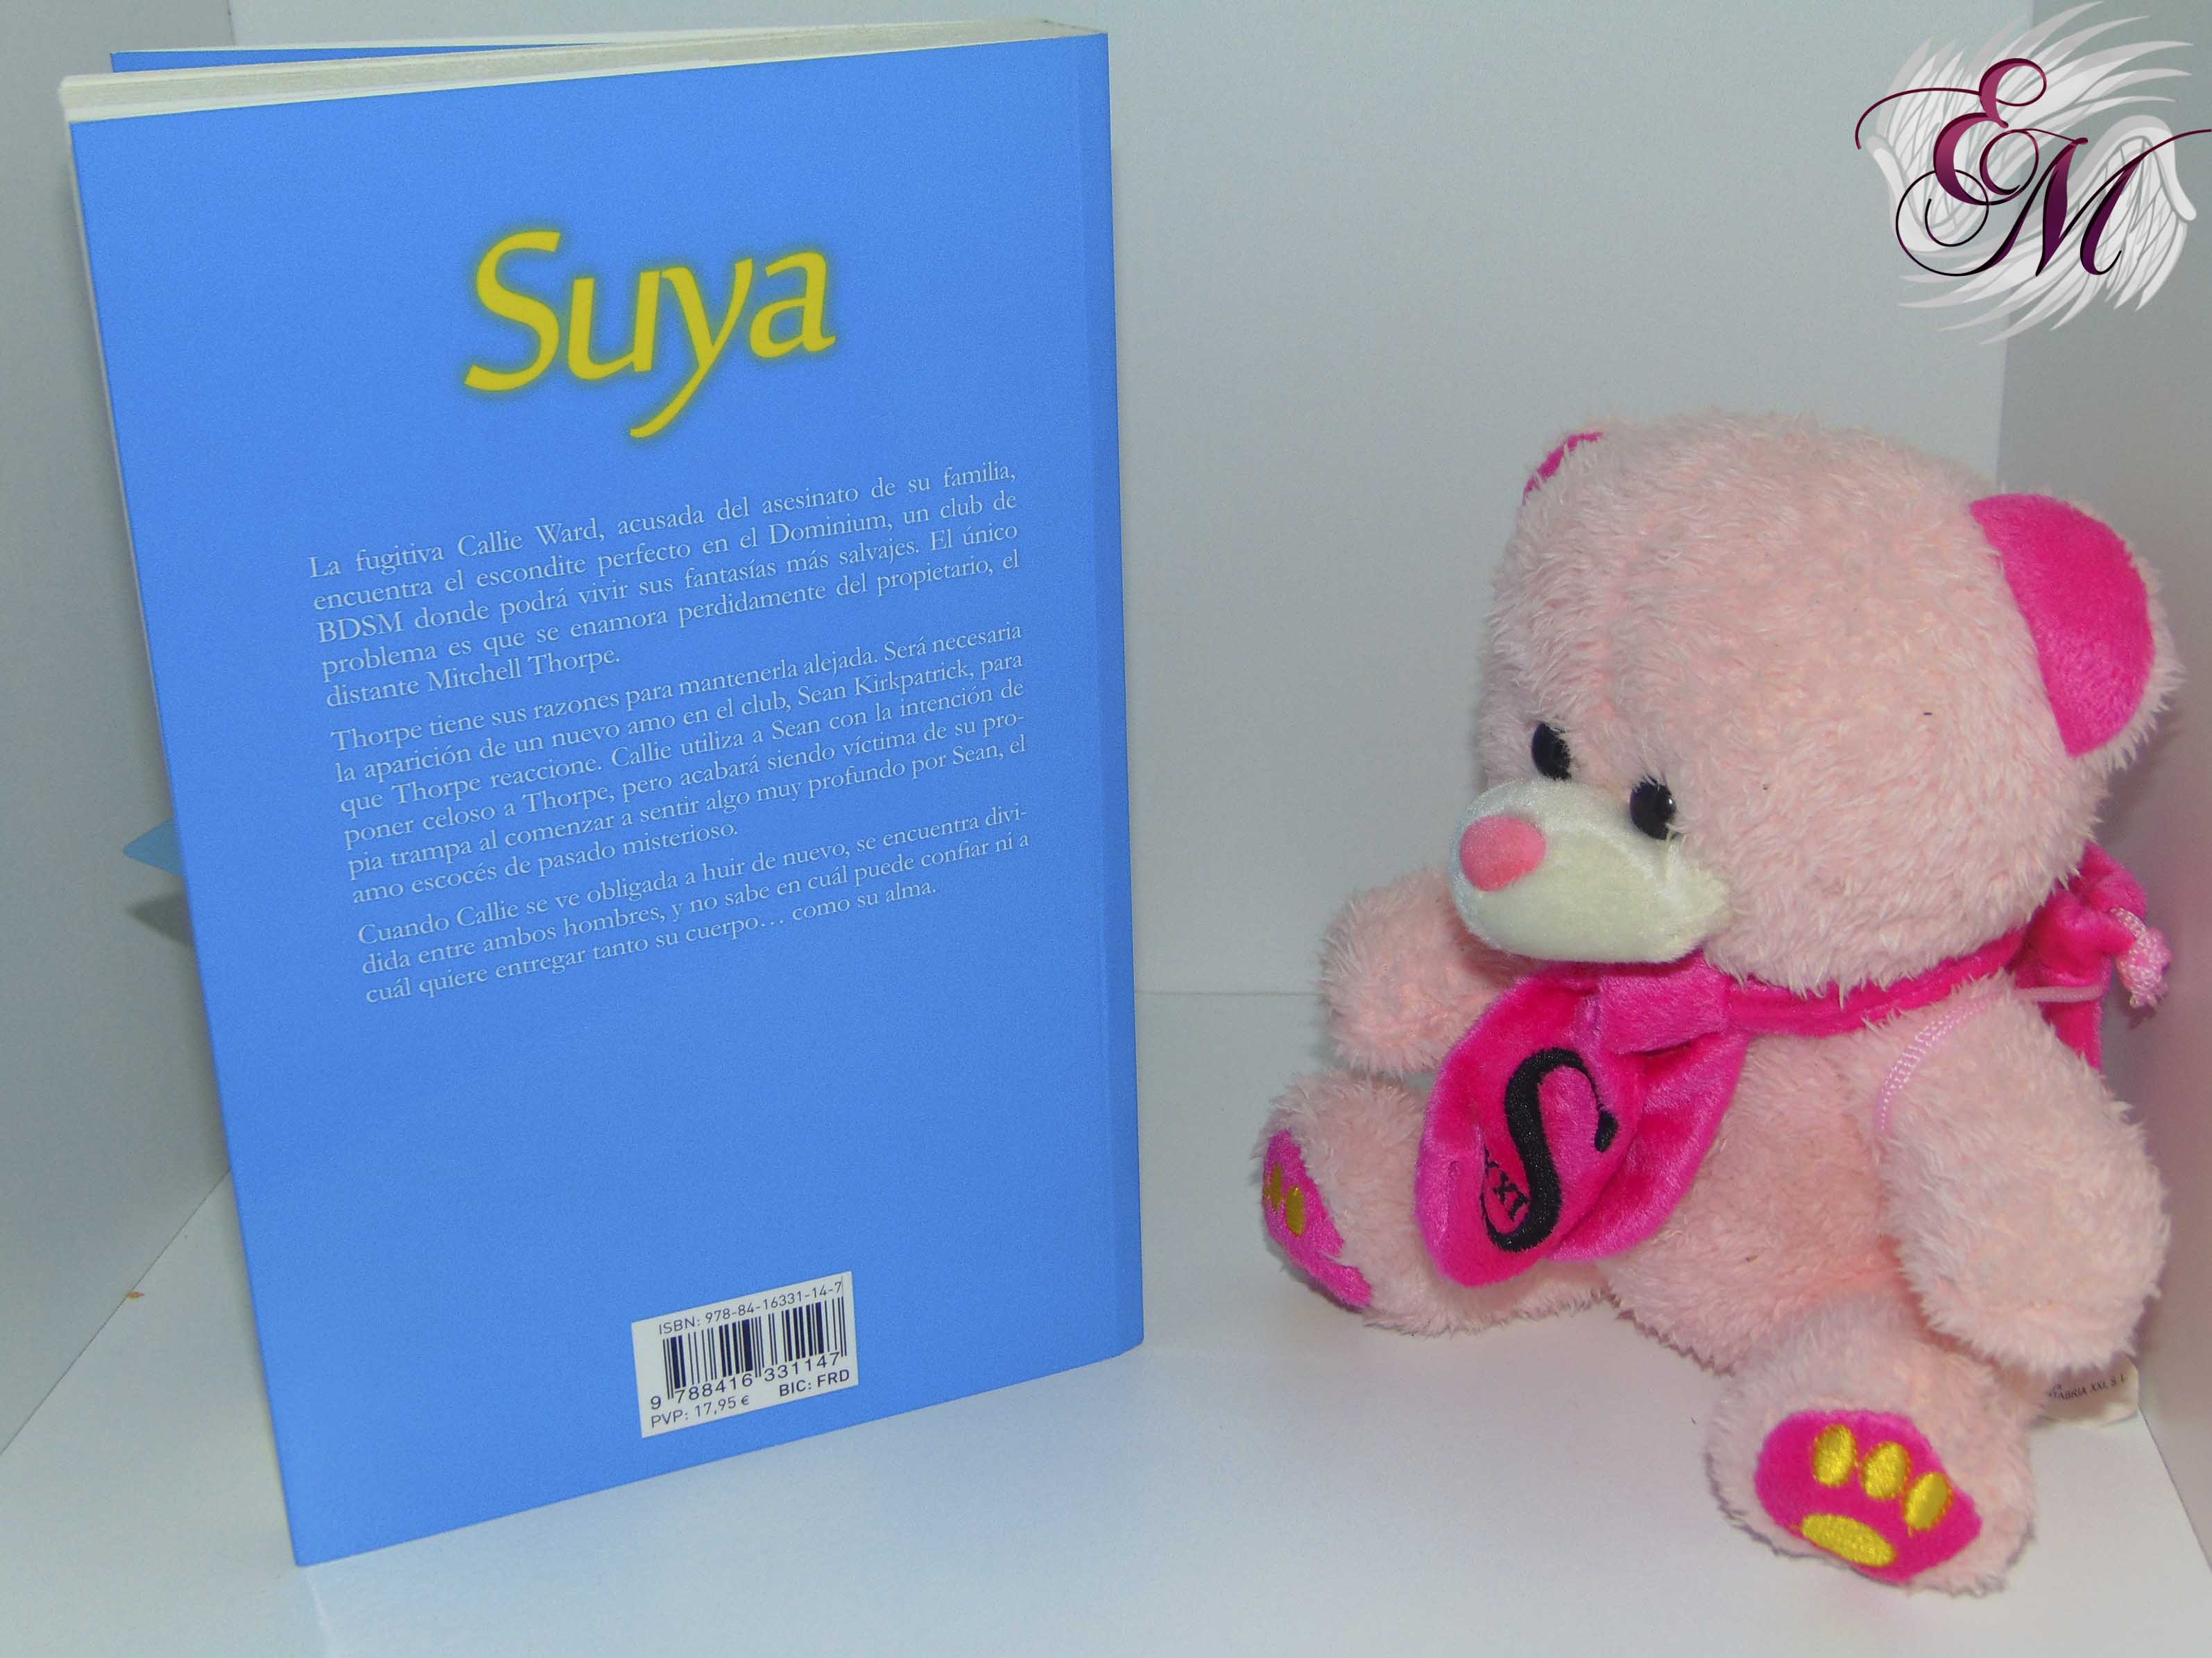 Suya, de Shayla Black - Reseña